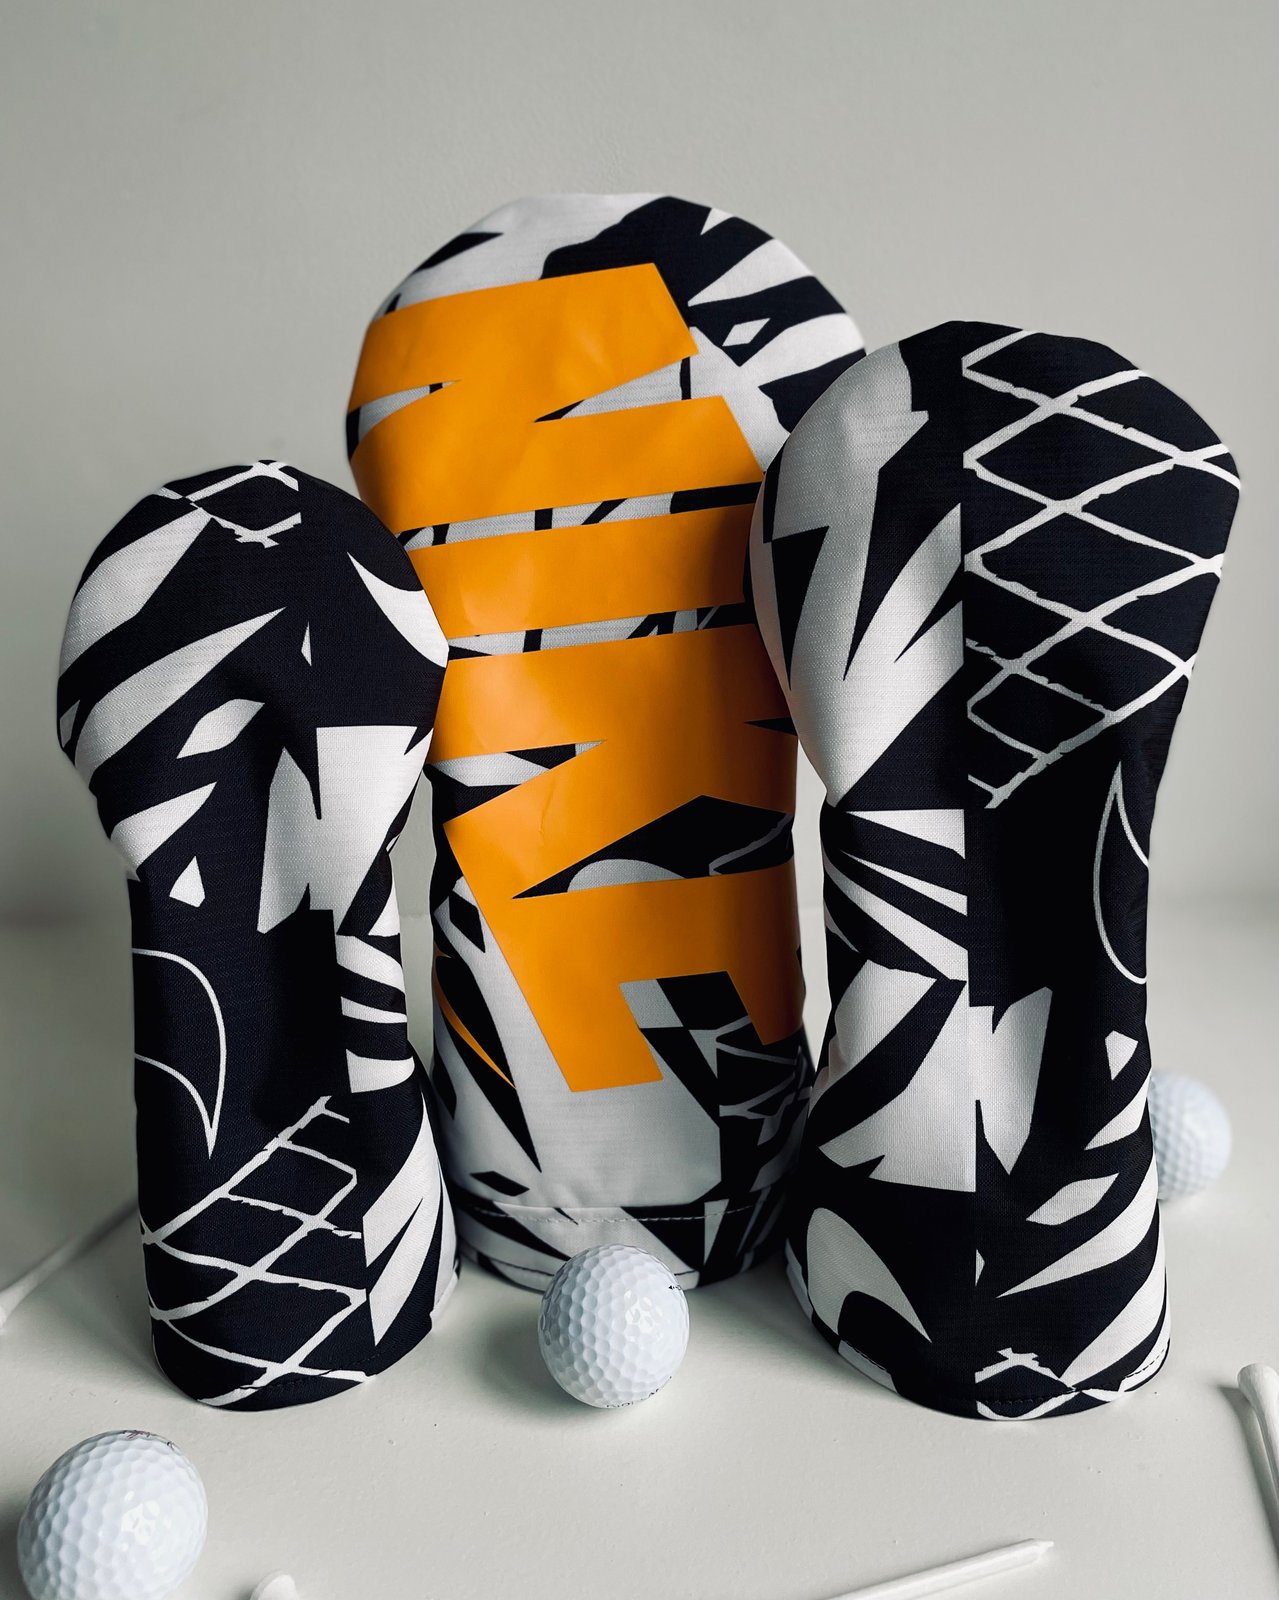 Nike golf headcover set - up-cycledアライメントスティックカバー